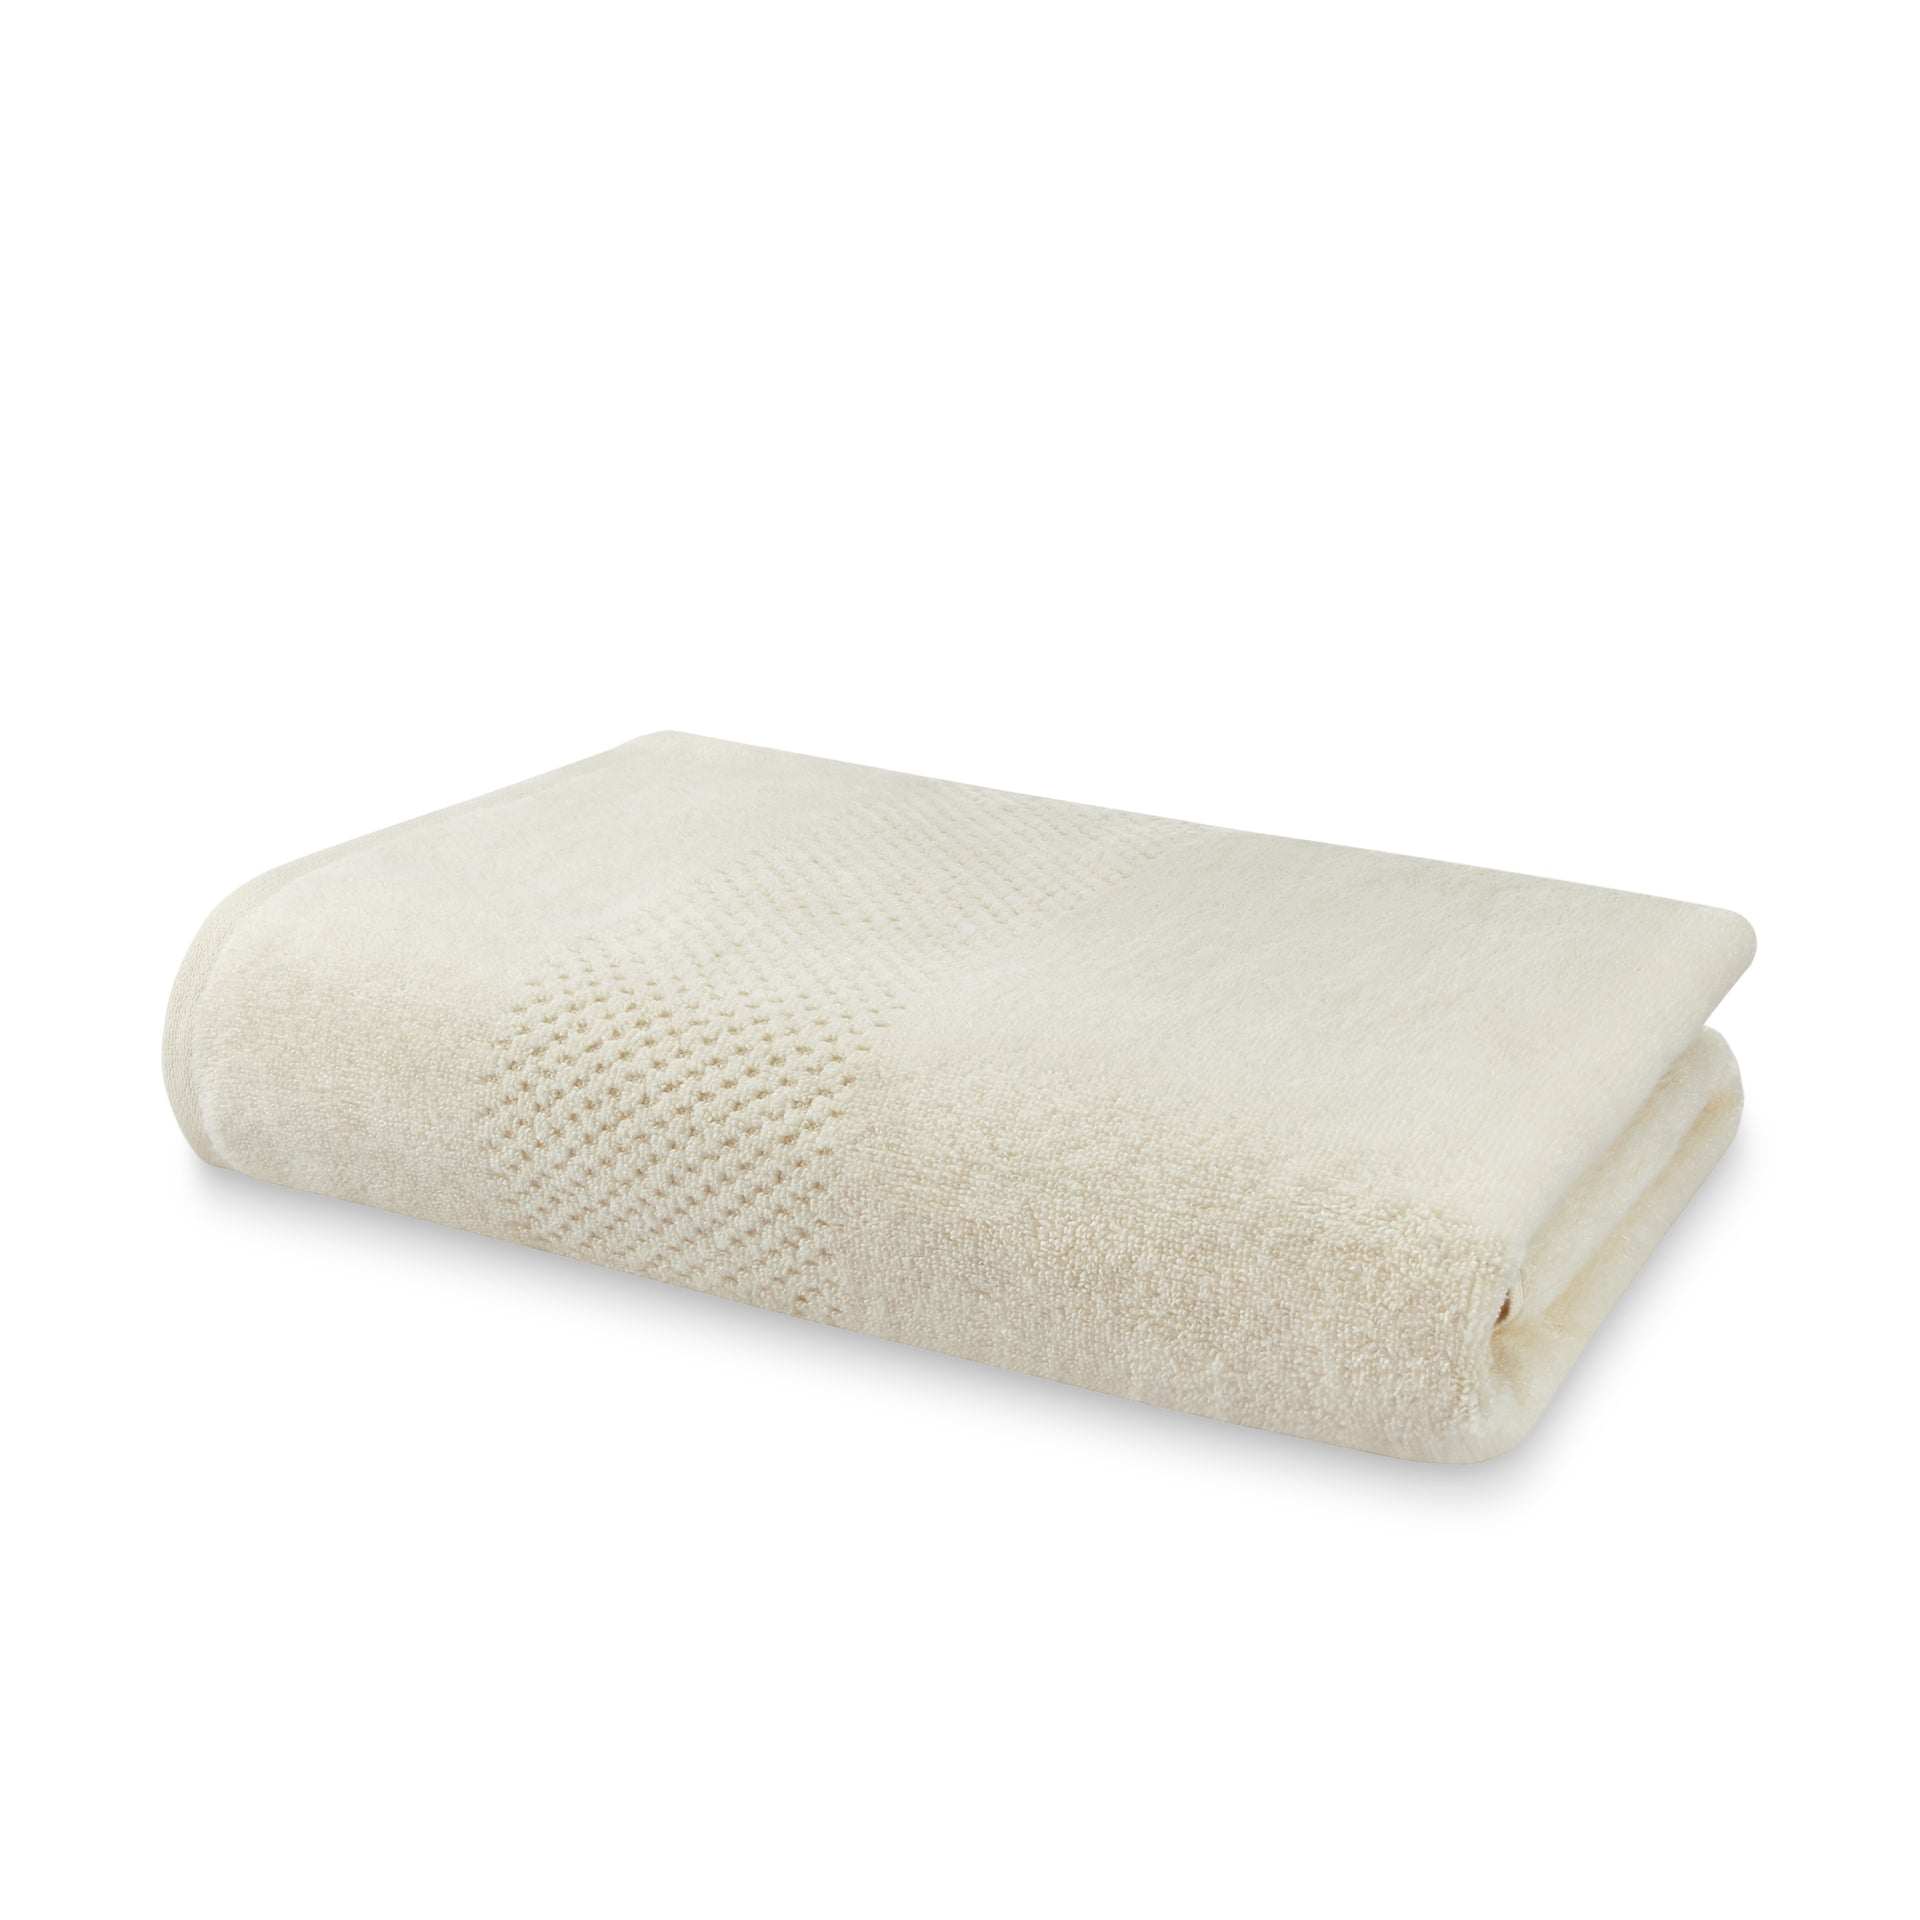 Spaces Swift Dry Bath Towel Standard Bath Towel 450 GSM(Pearl)